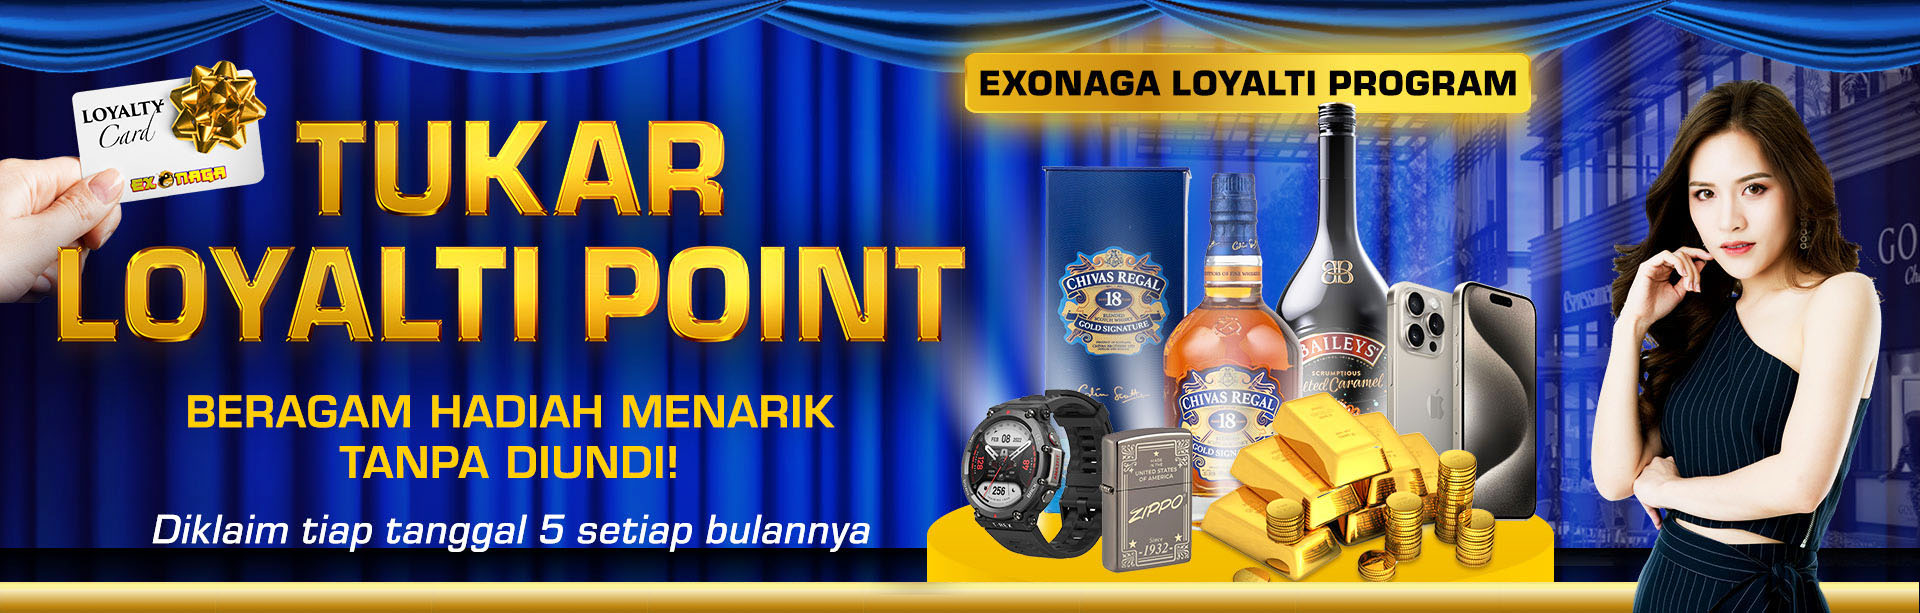 loyalty point exonaga